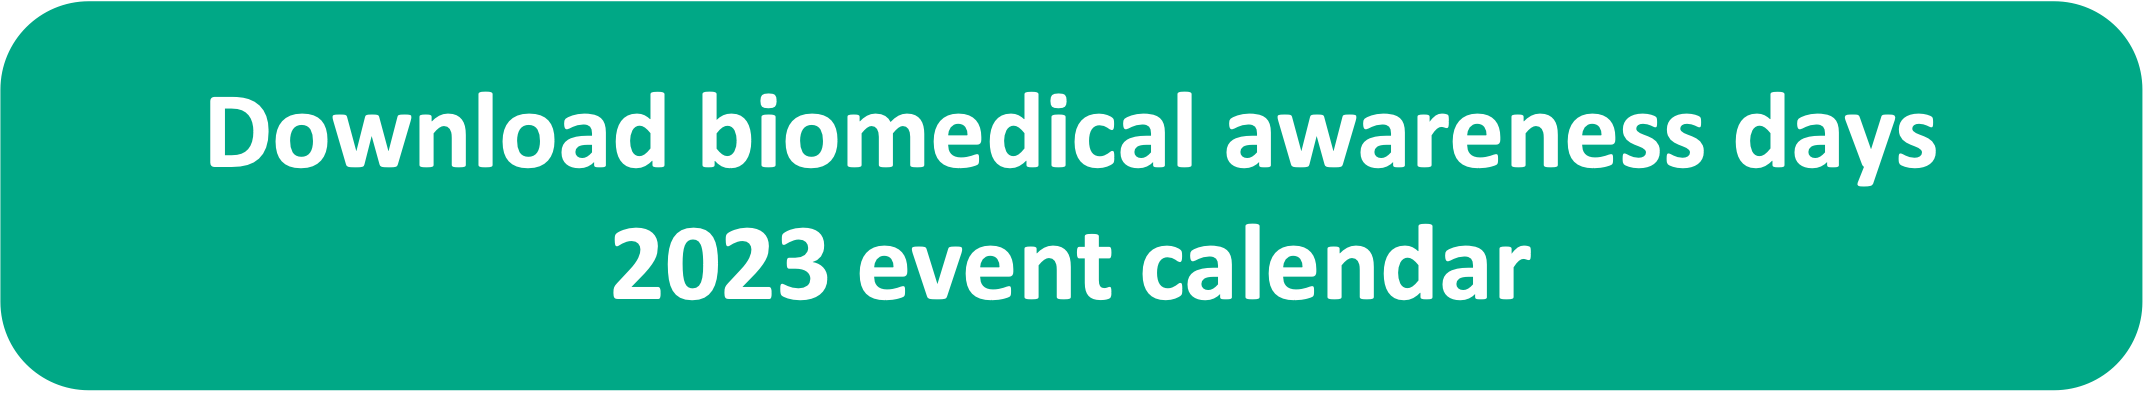 Download biomedical awareness days 2023 event calendar 